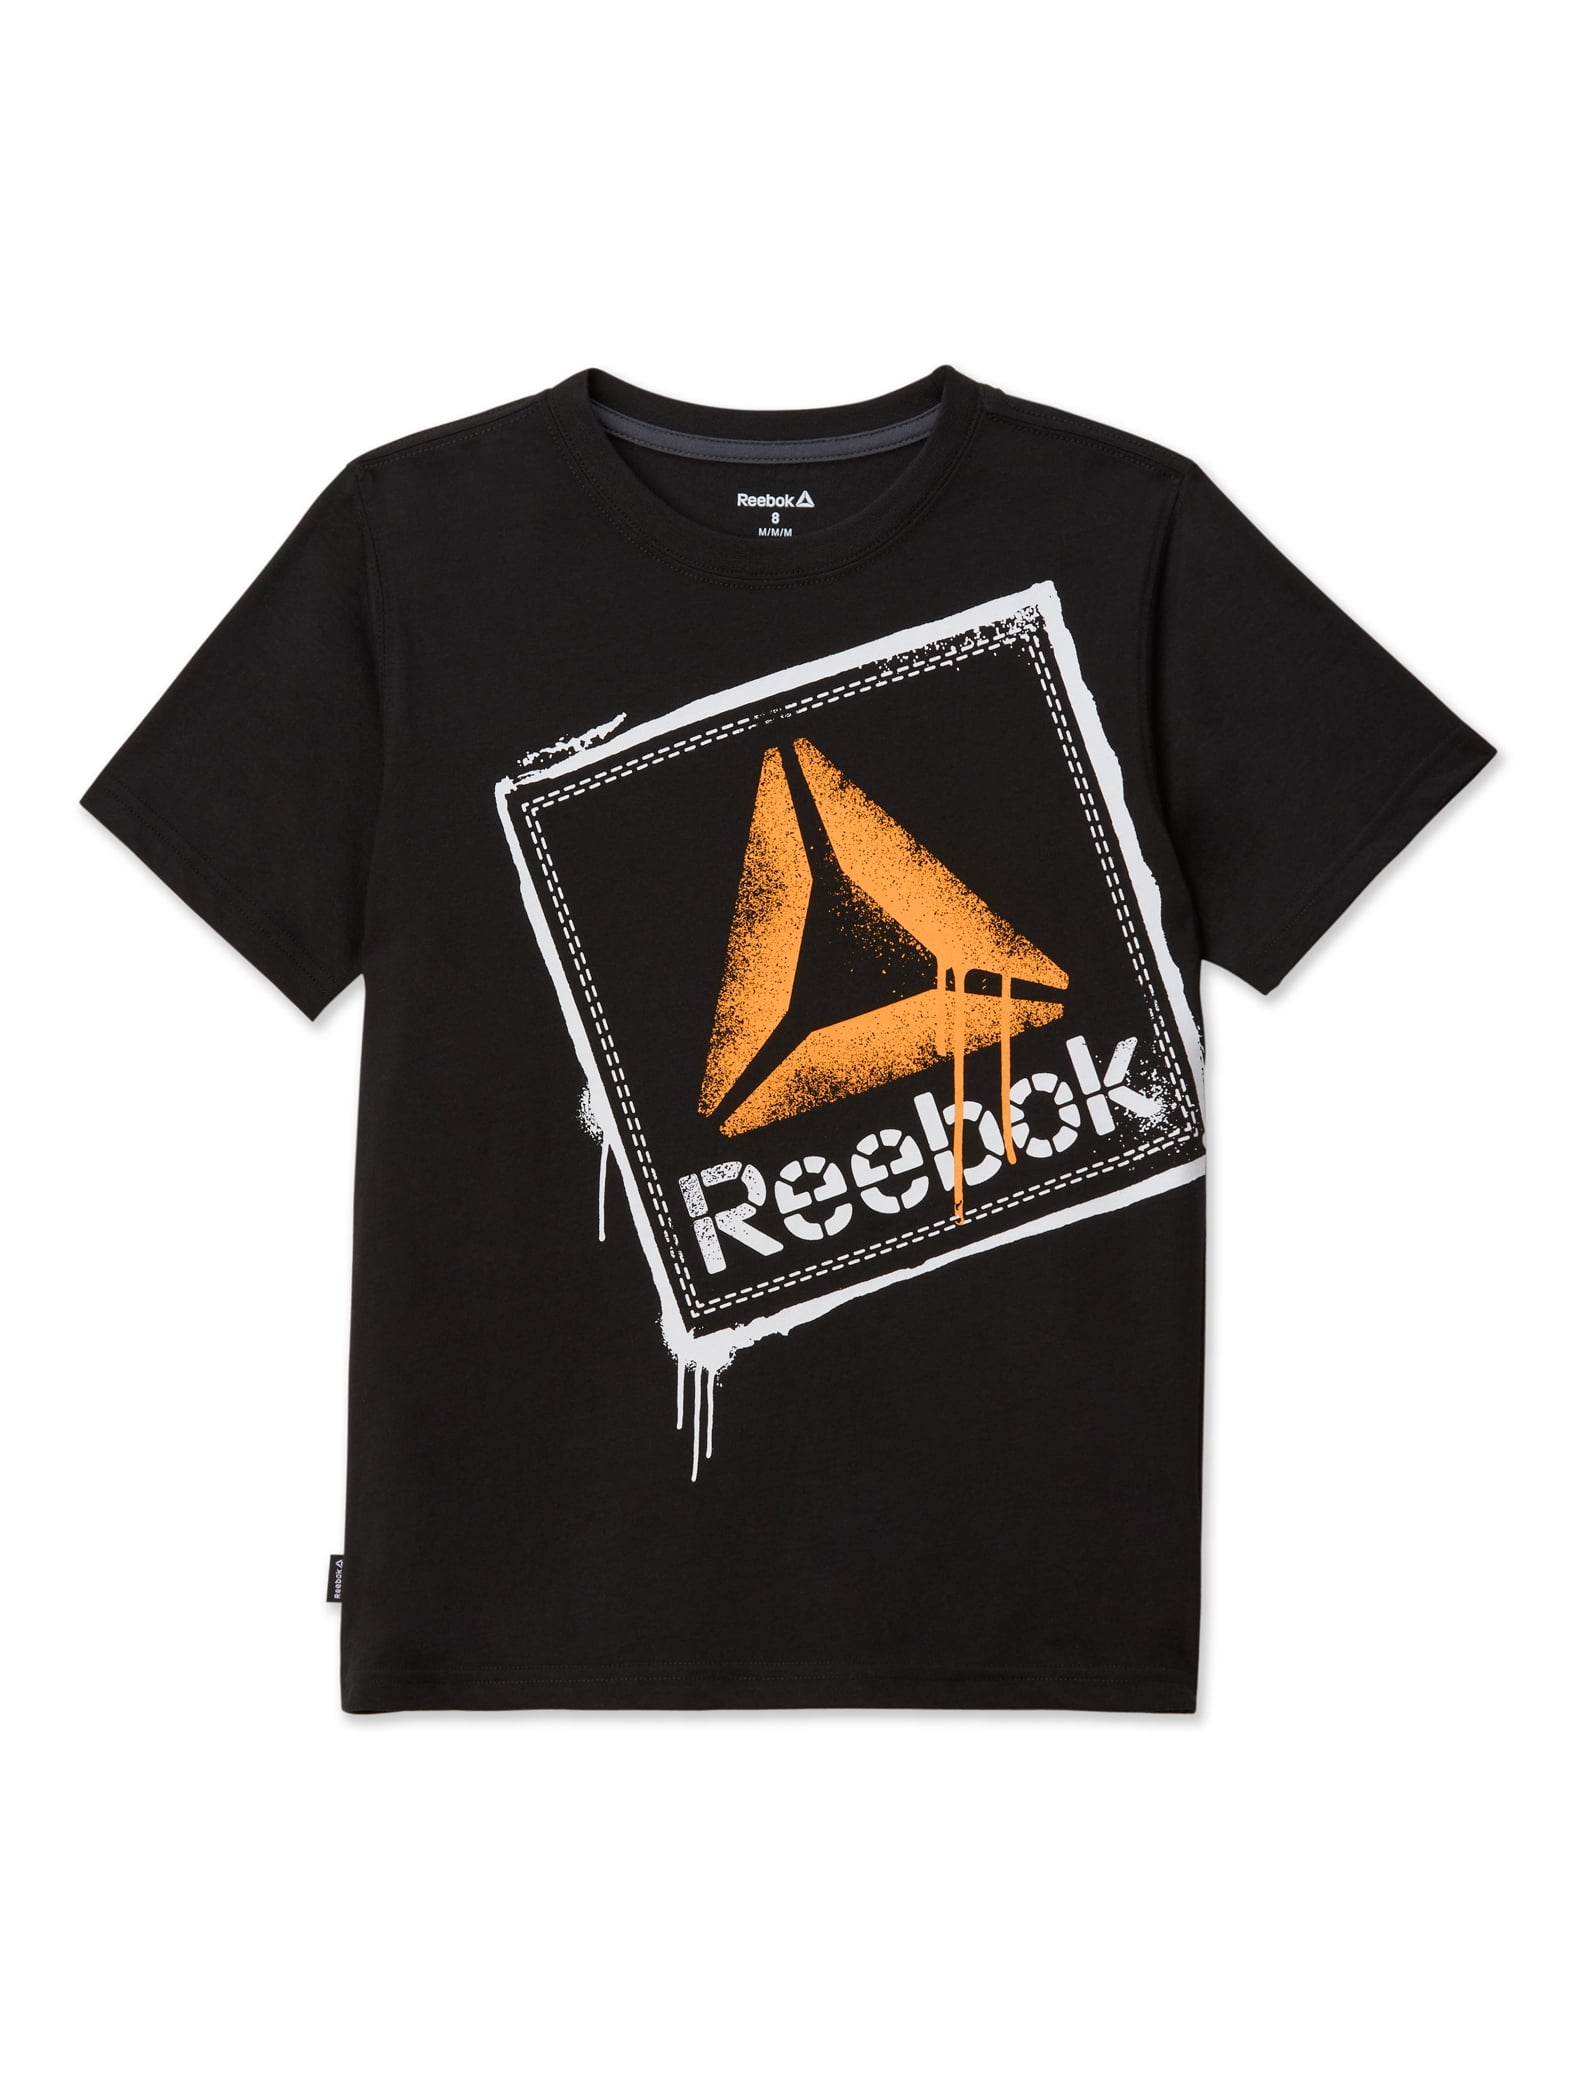 Reebok Boys Logo Graphic Short Sleeve Tee, Sizes 4-18